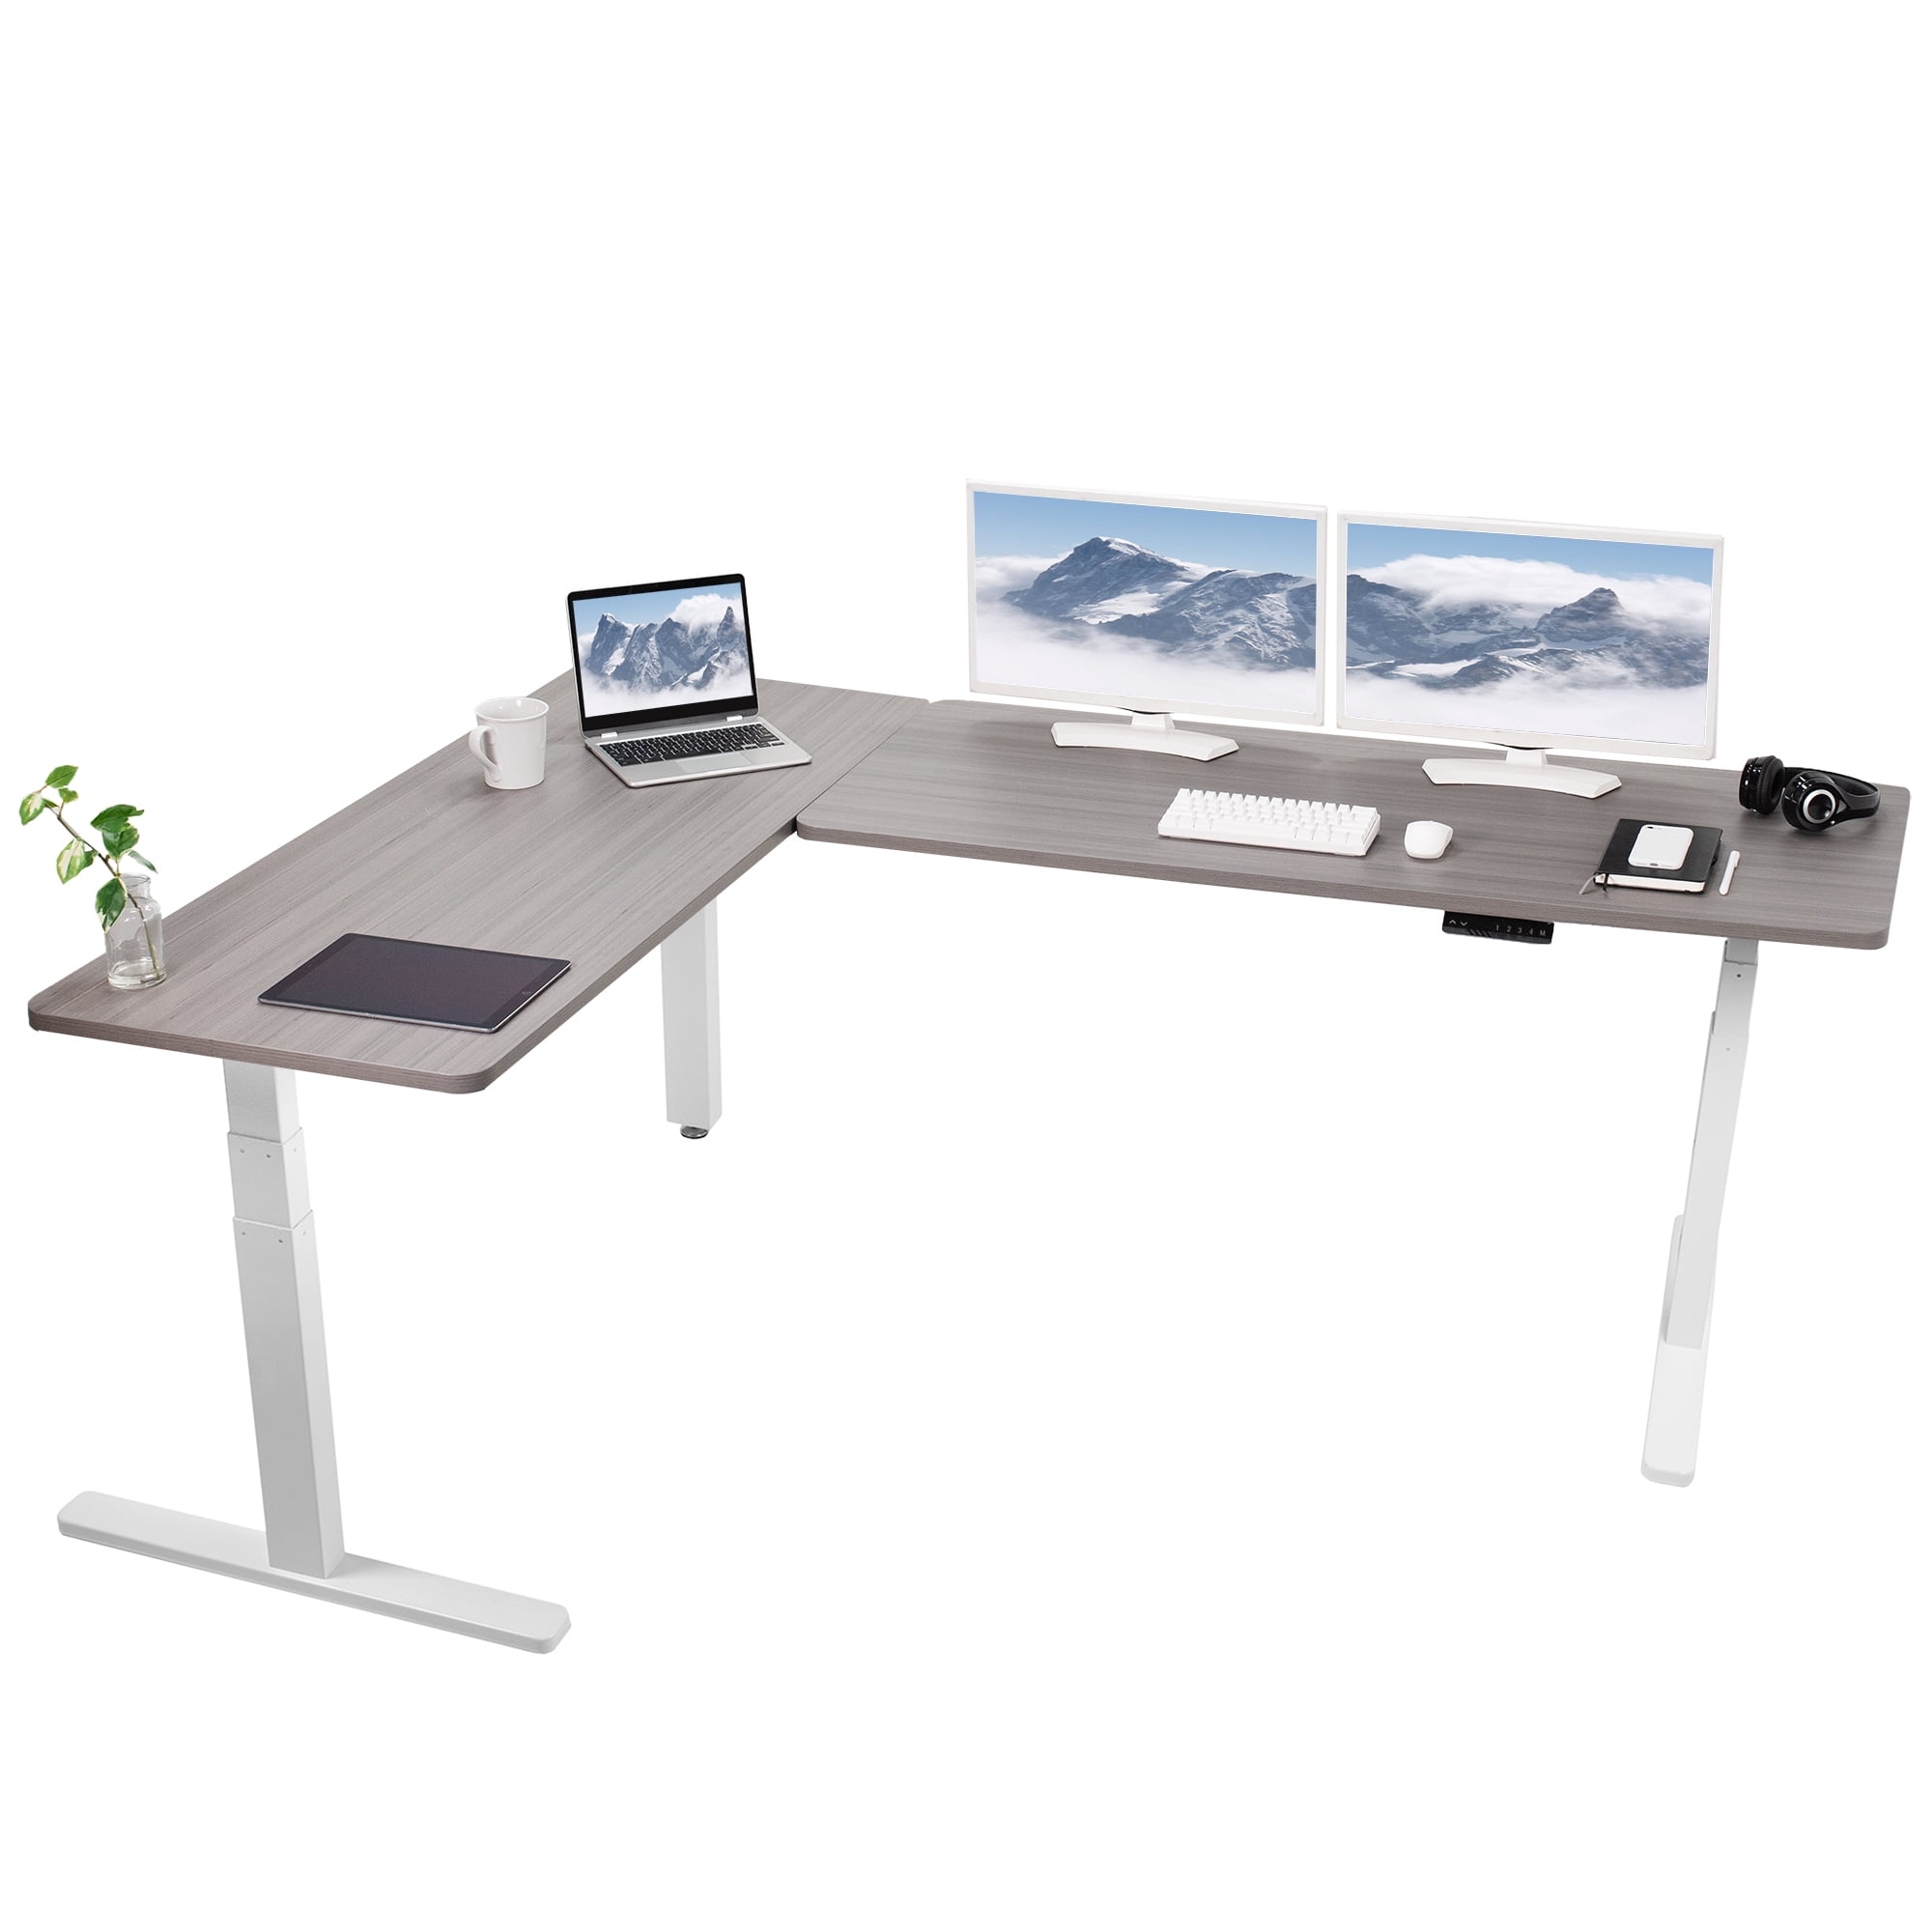 Black 48 x 24 Table Top with RGB Lighting – VIVO - desk